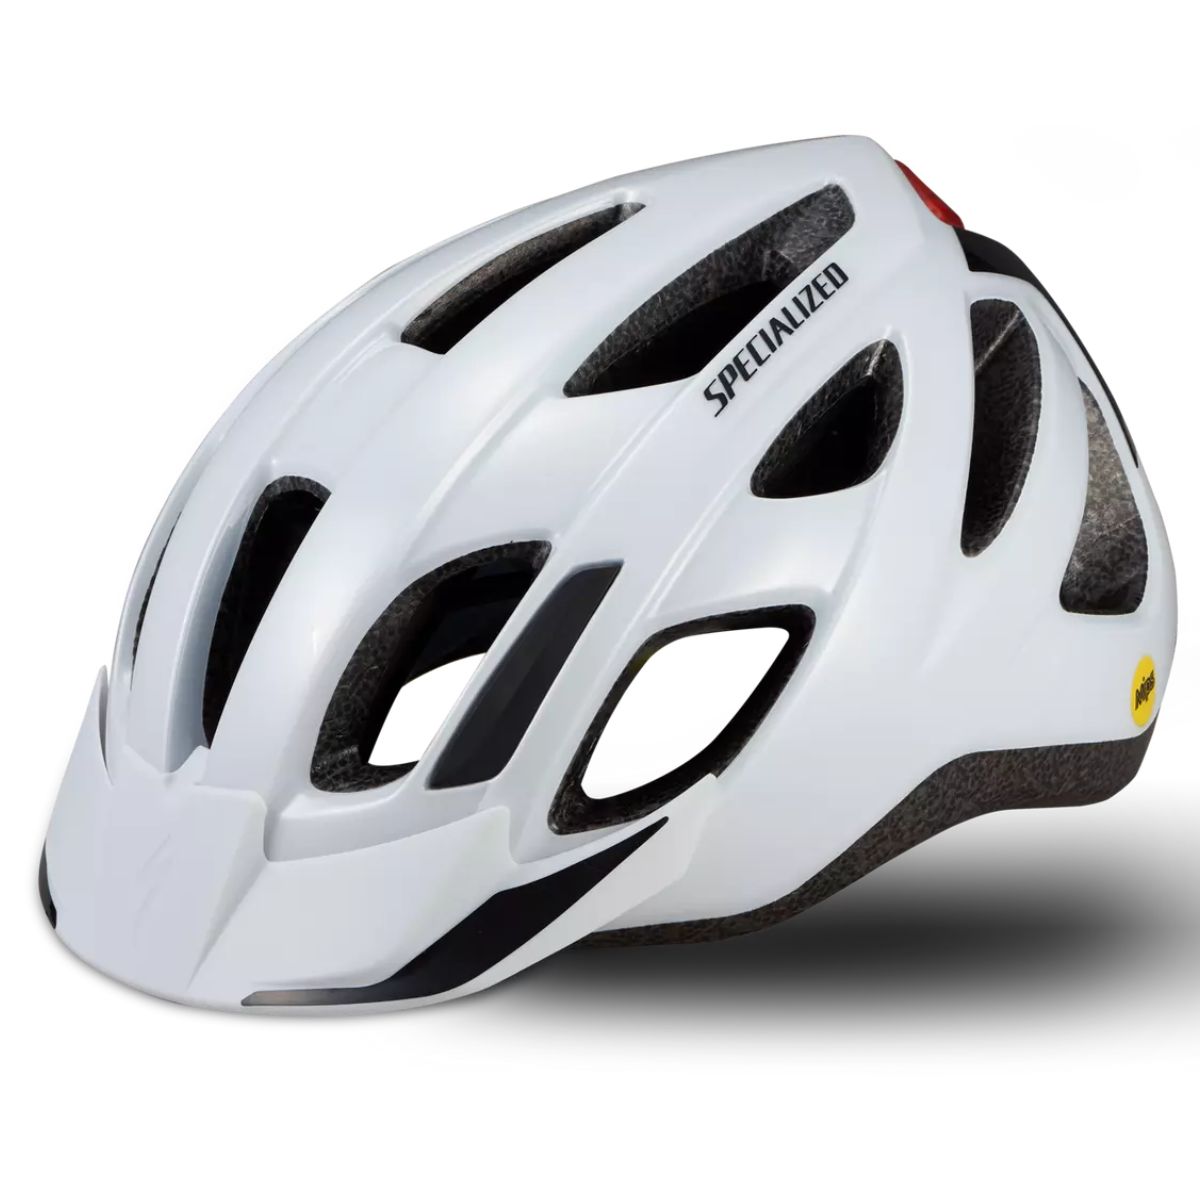 Specialized Centro Led Helmet 